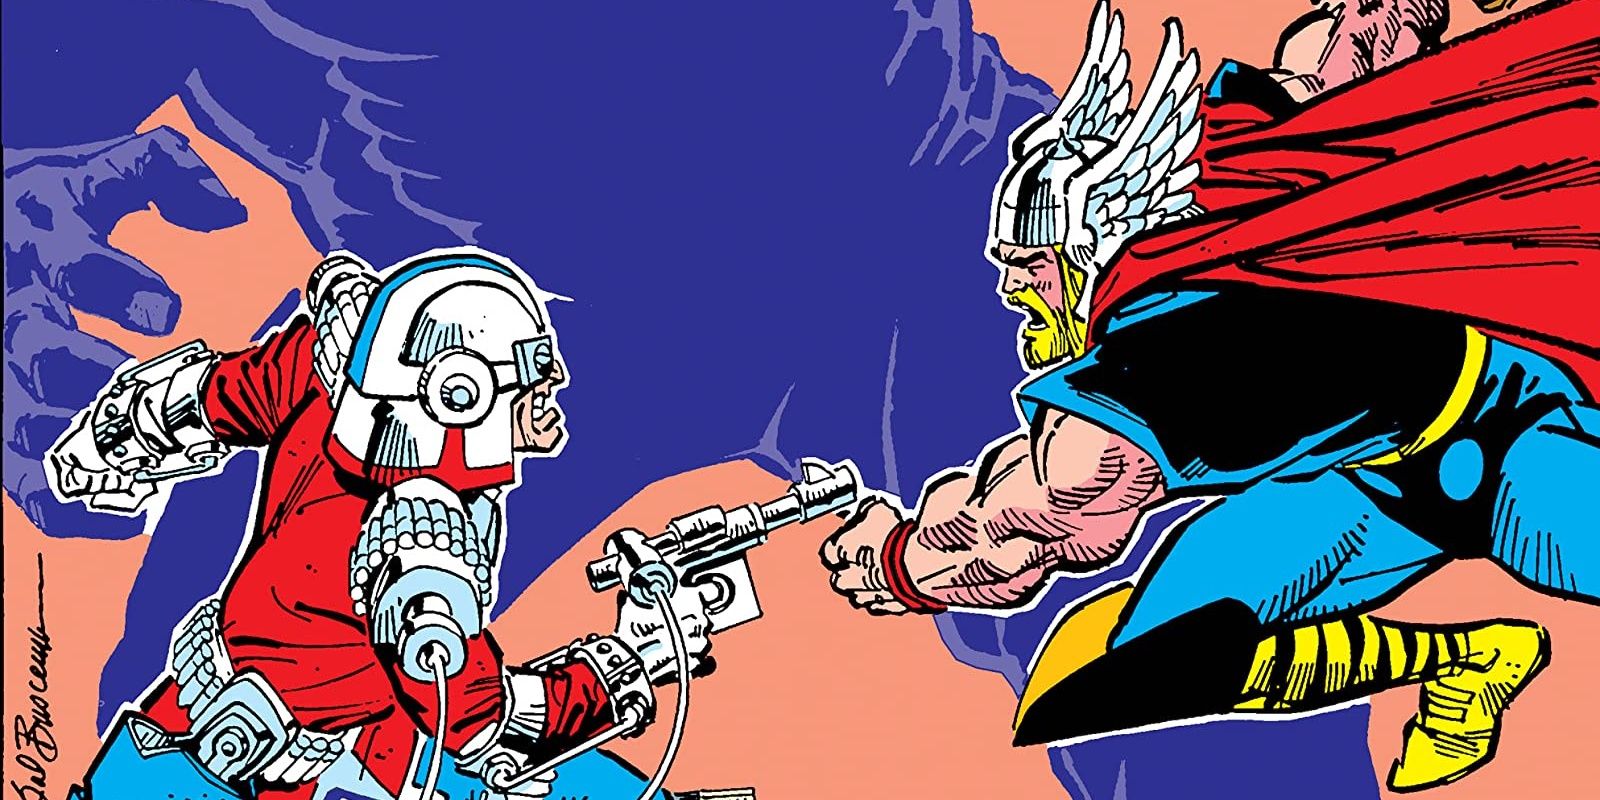 Loki 10 Comic Book Storylines That Inspired The MCU Series